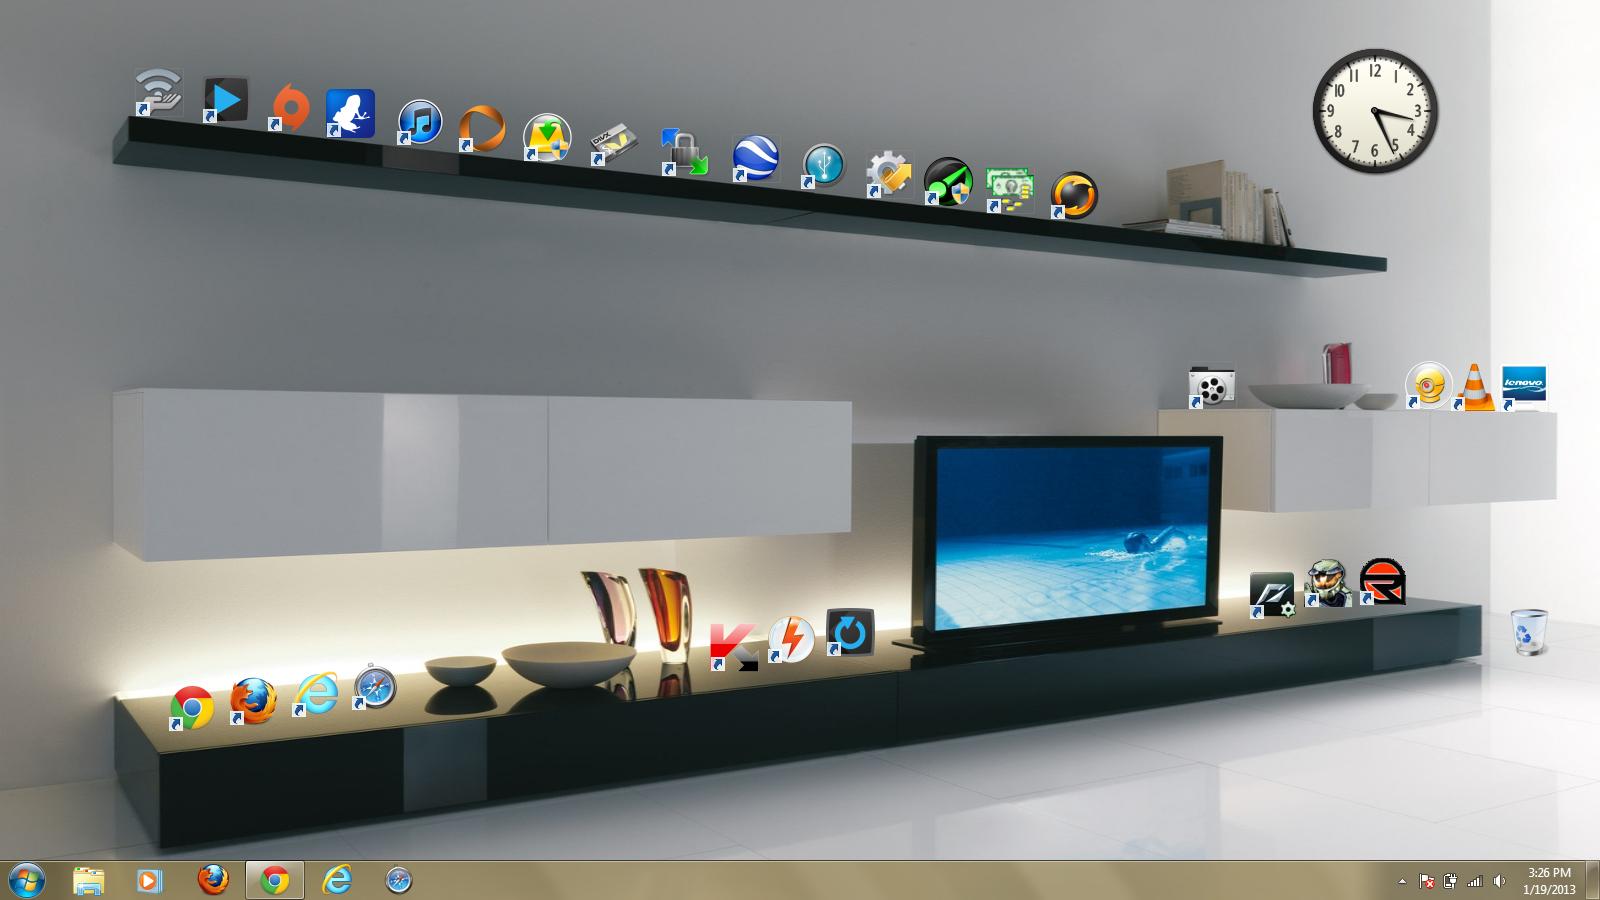 Creative Desktop Backgrounds Shelves The original wallpaper